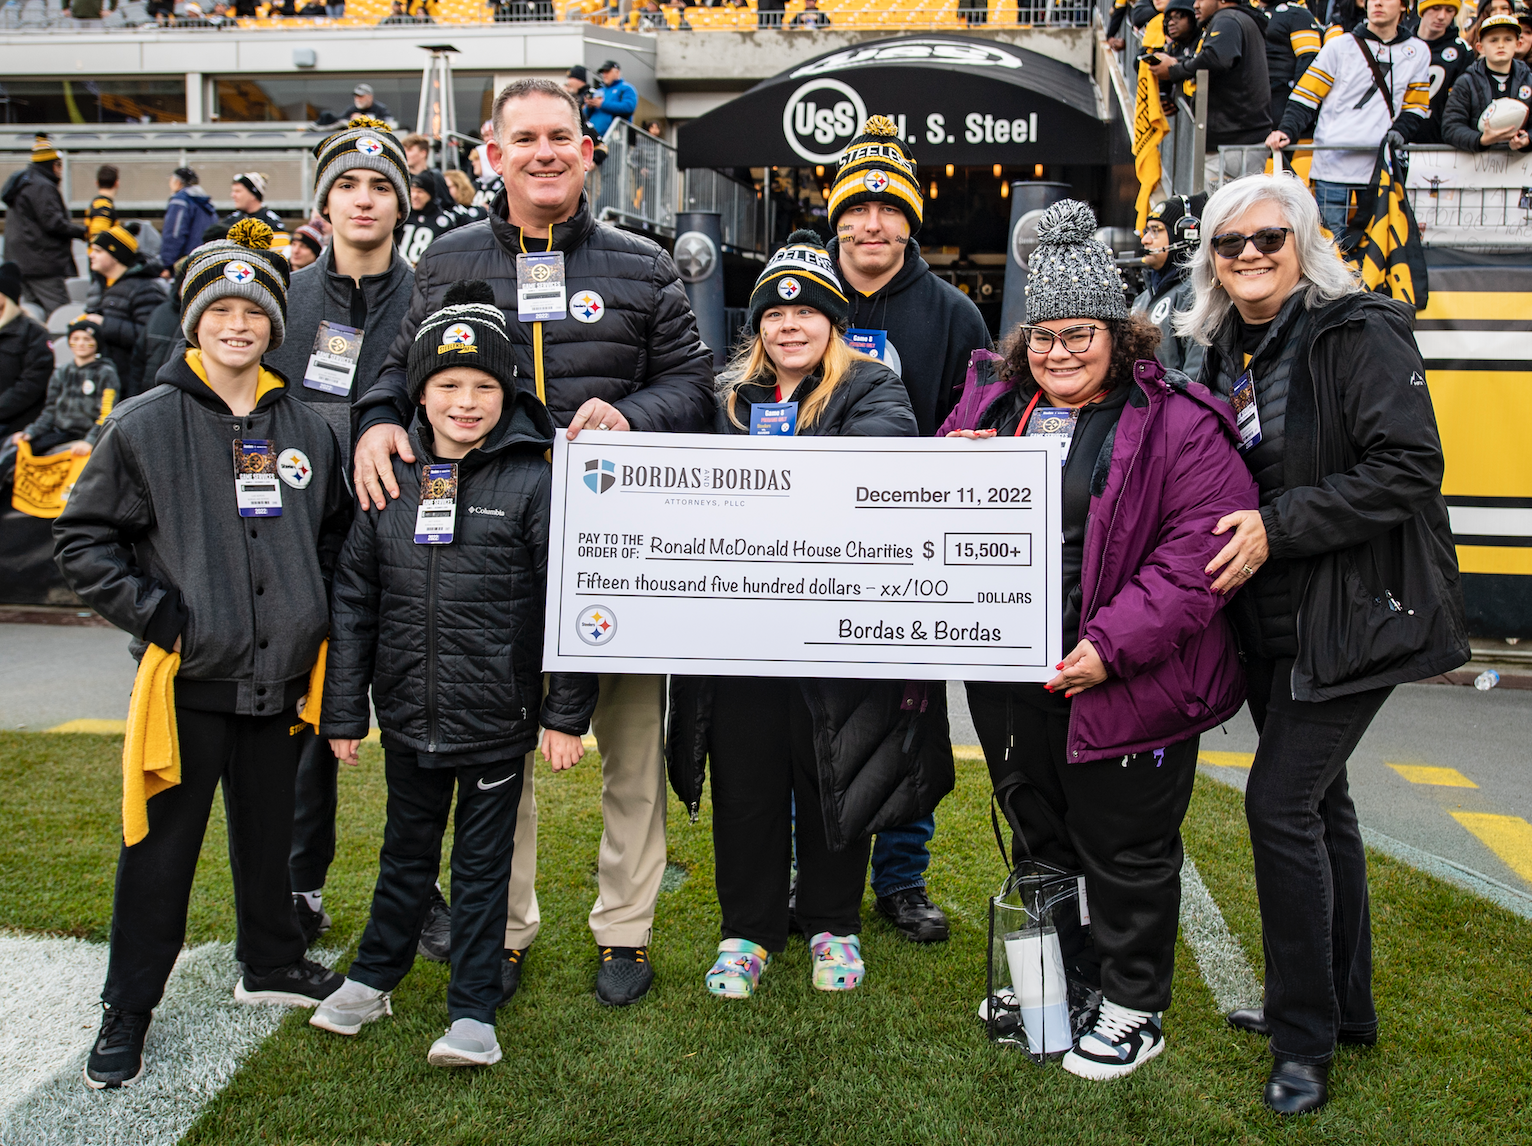 Bordas & Bordas Donates $15,500 to Ronald McDonald House through Pittsburgh Steelers Partnership 2022, Group photo